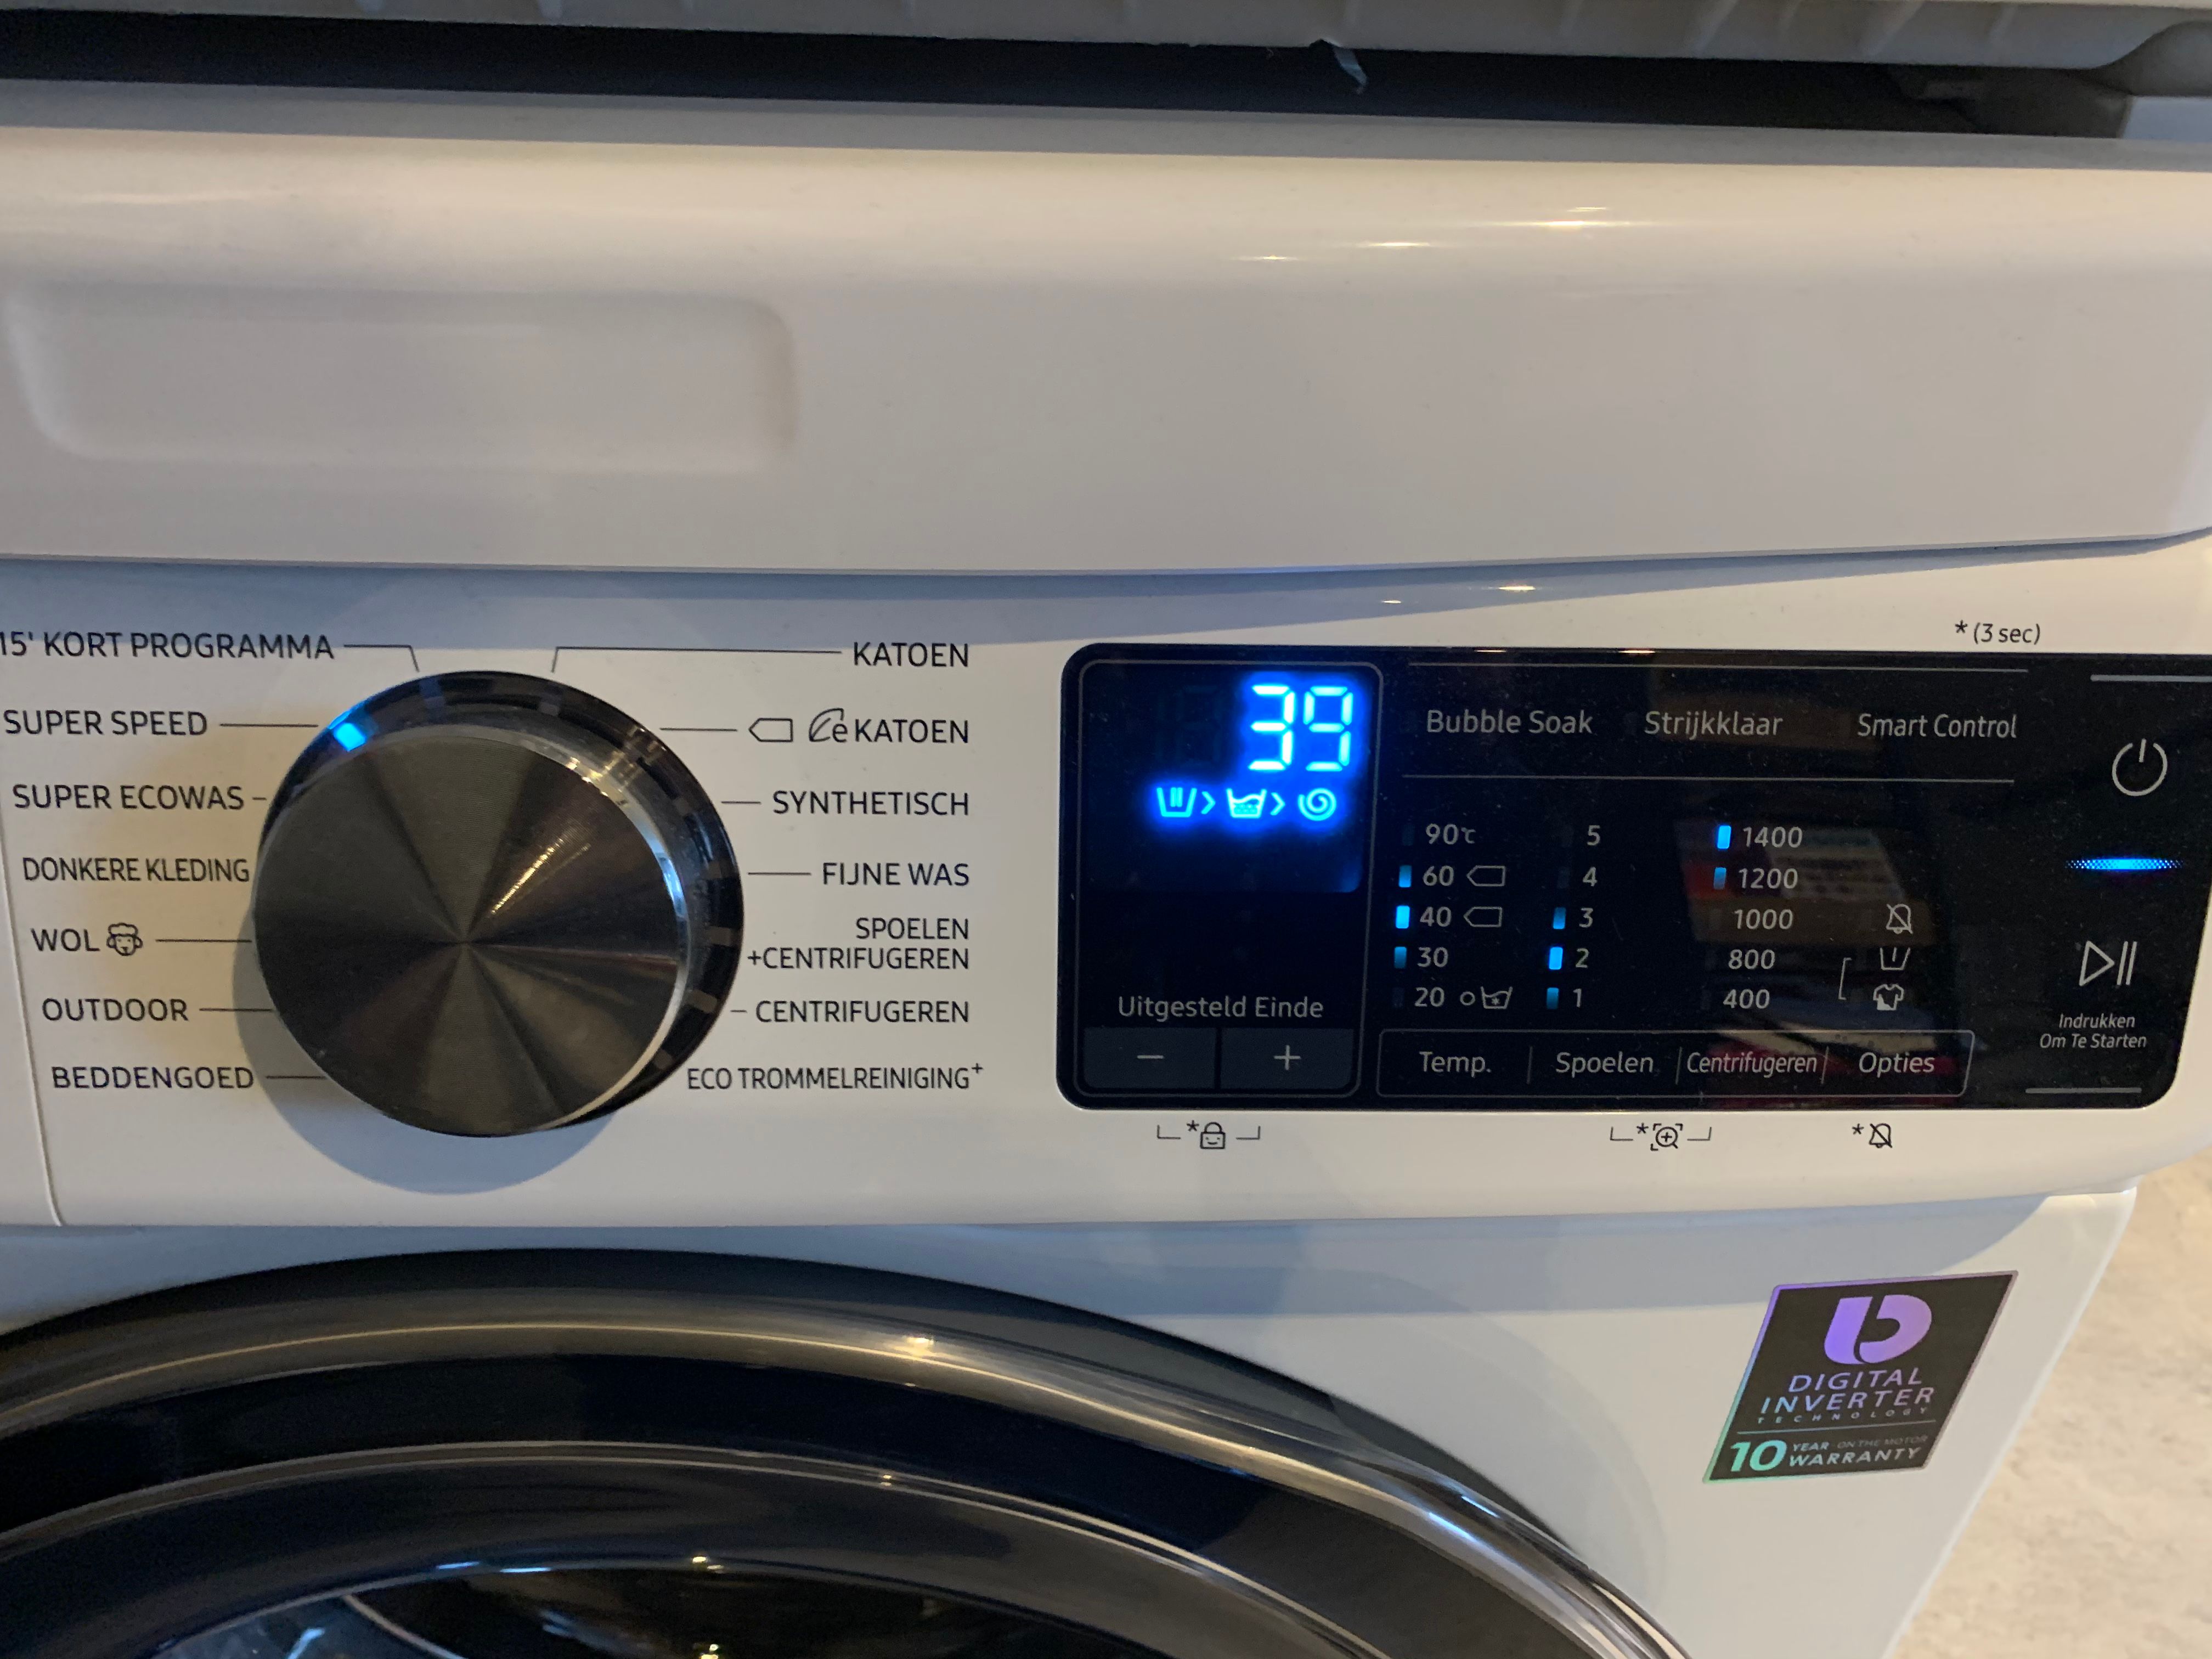 Solved: Washing machine WW80M642OBW keeps washing for 3 hours - Samsung  Community